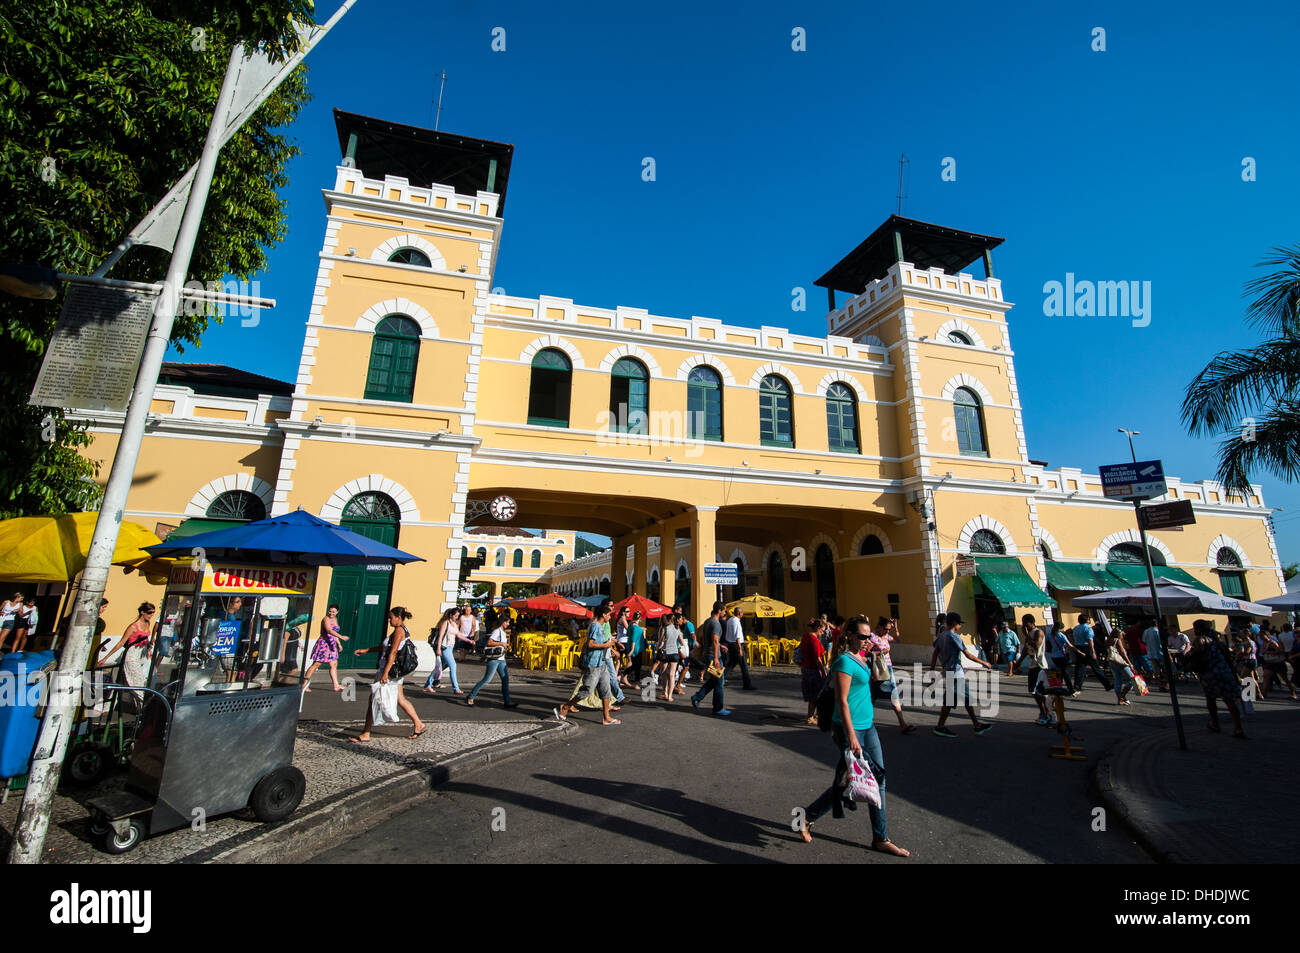 Public market in Florianopolis, Santa Catarina State, Brazil Stock Photo